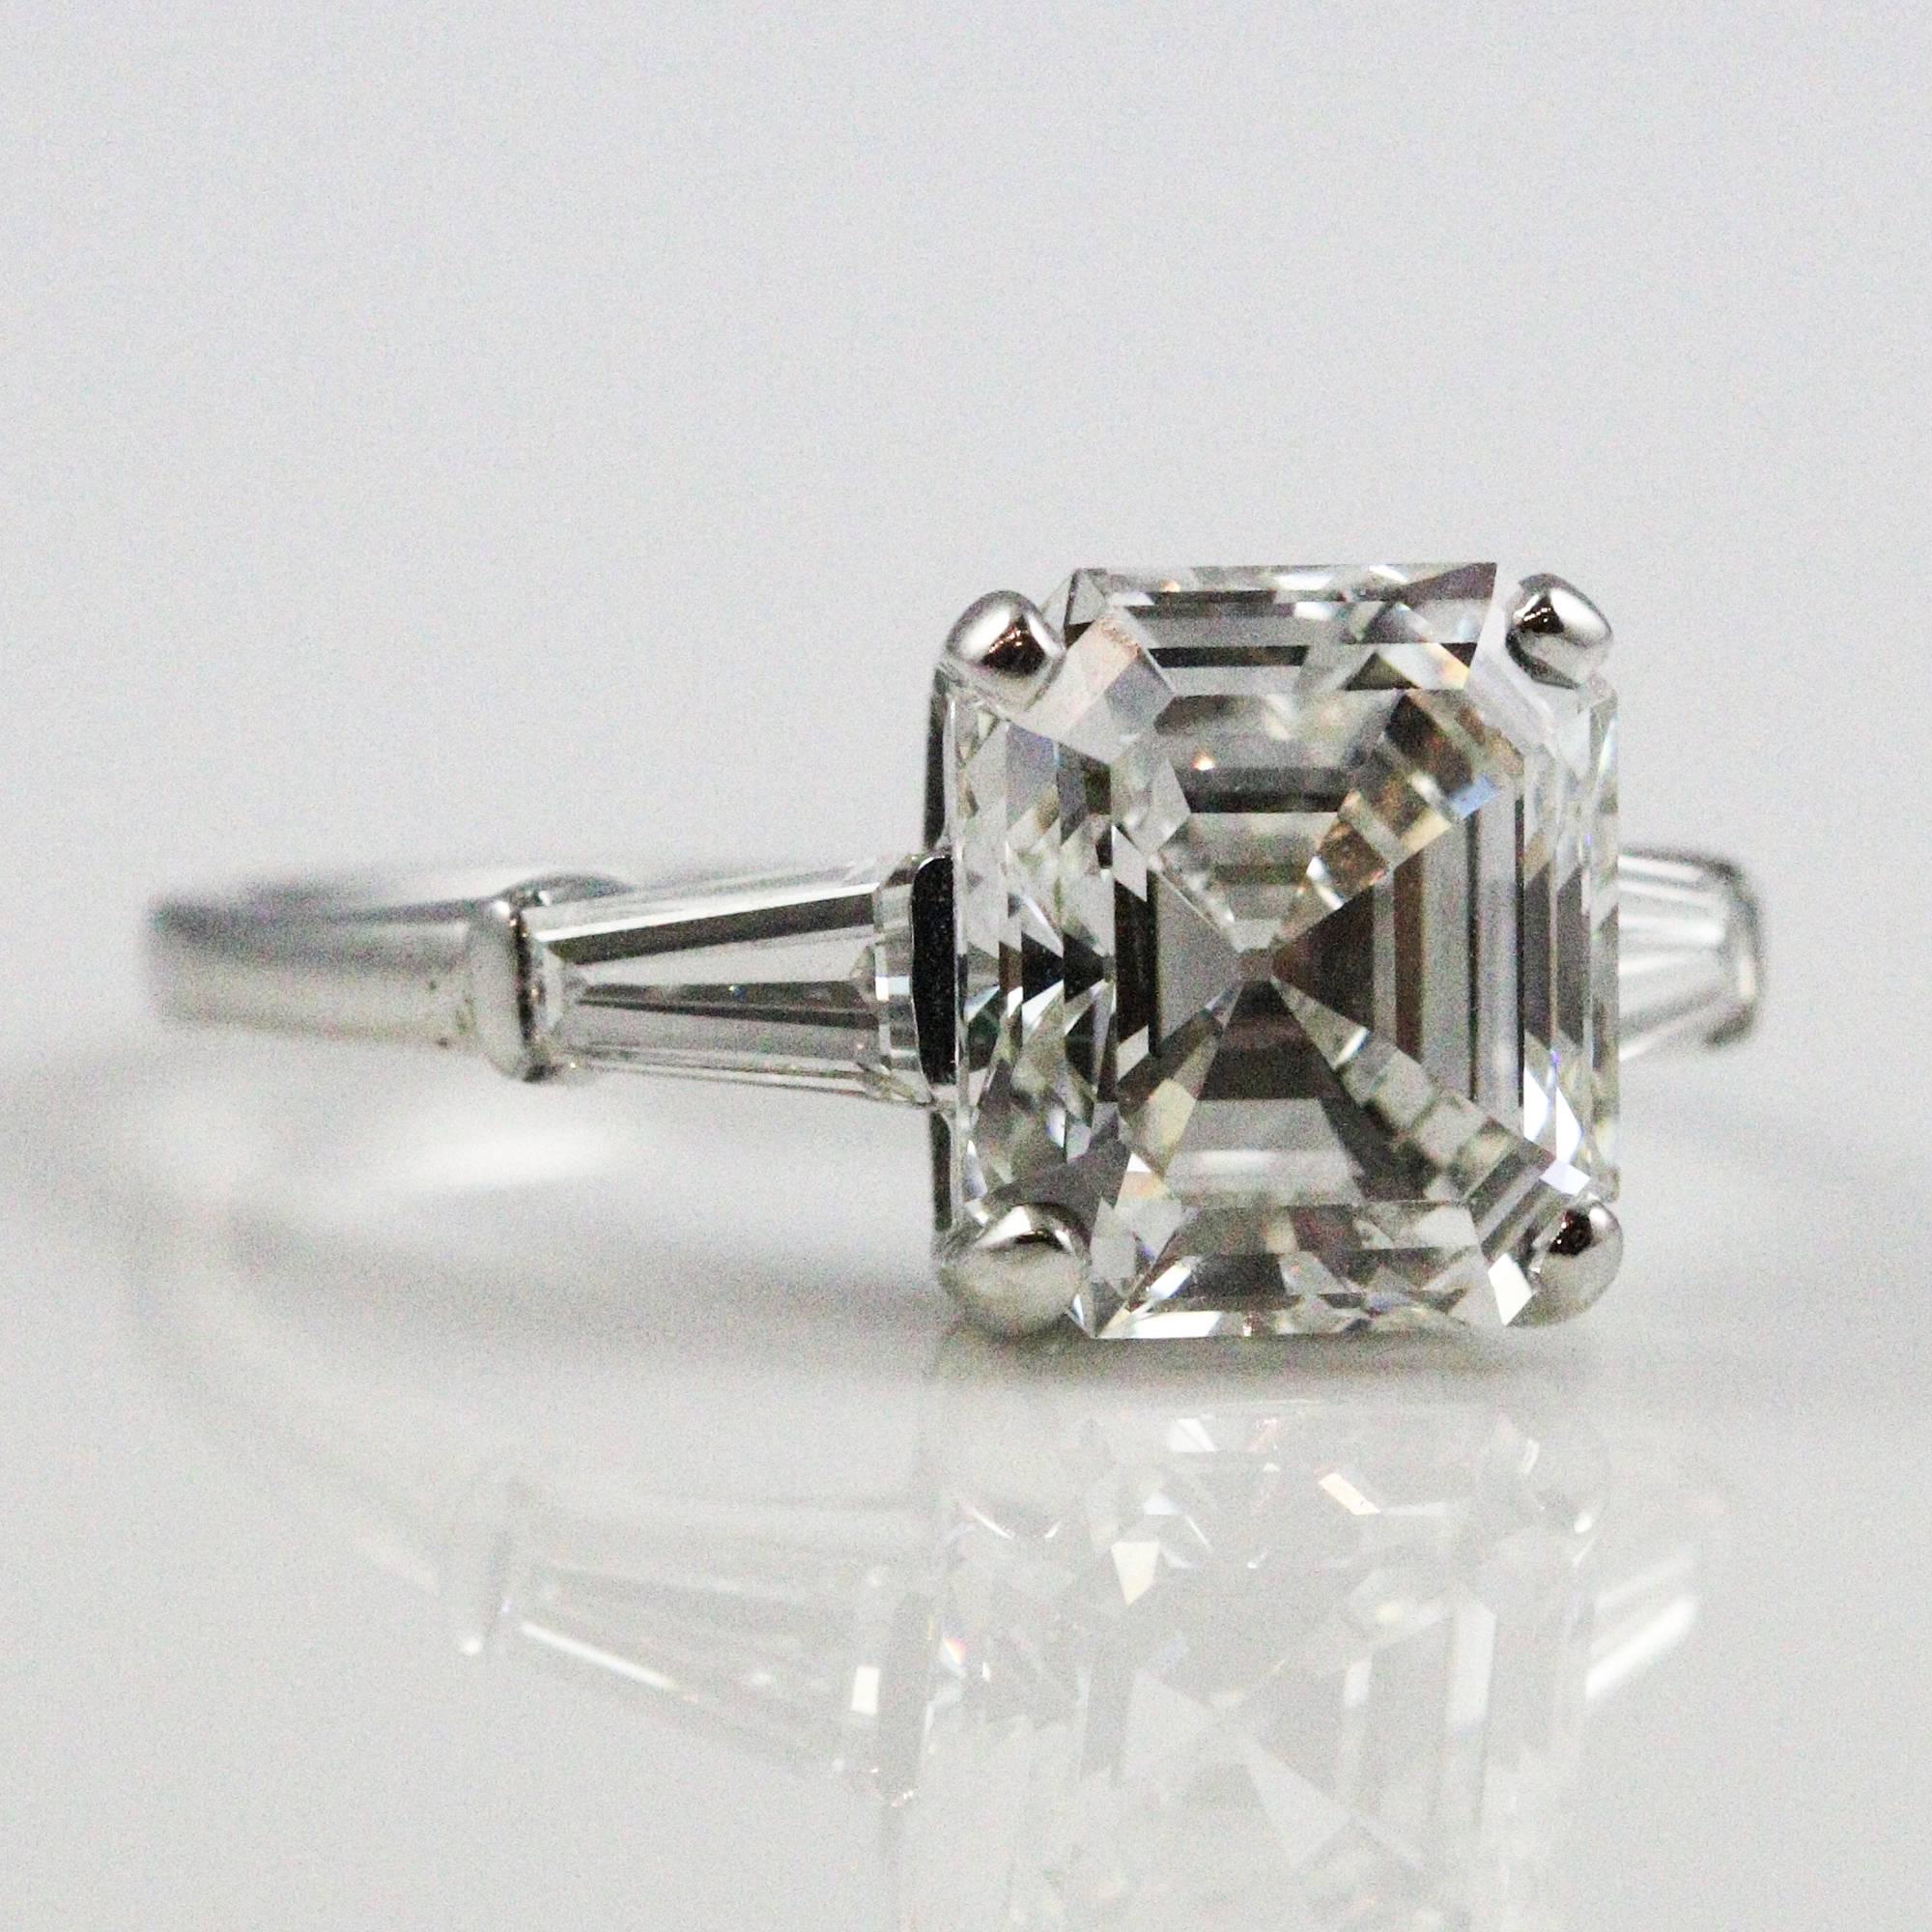 Women's Magnificent 3.87 Carat GIA Certified Emerald Cut Diamond Ring